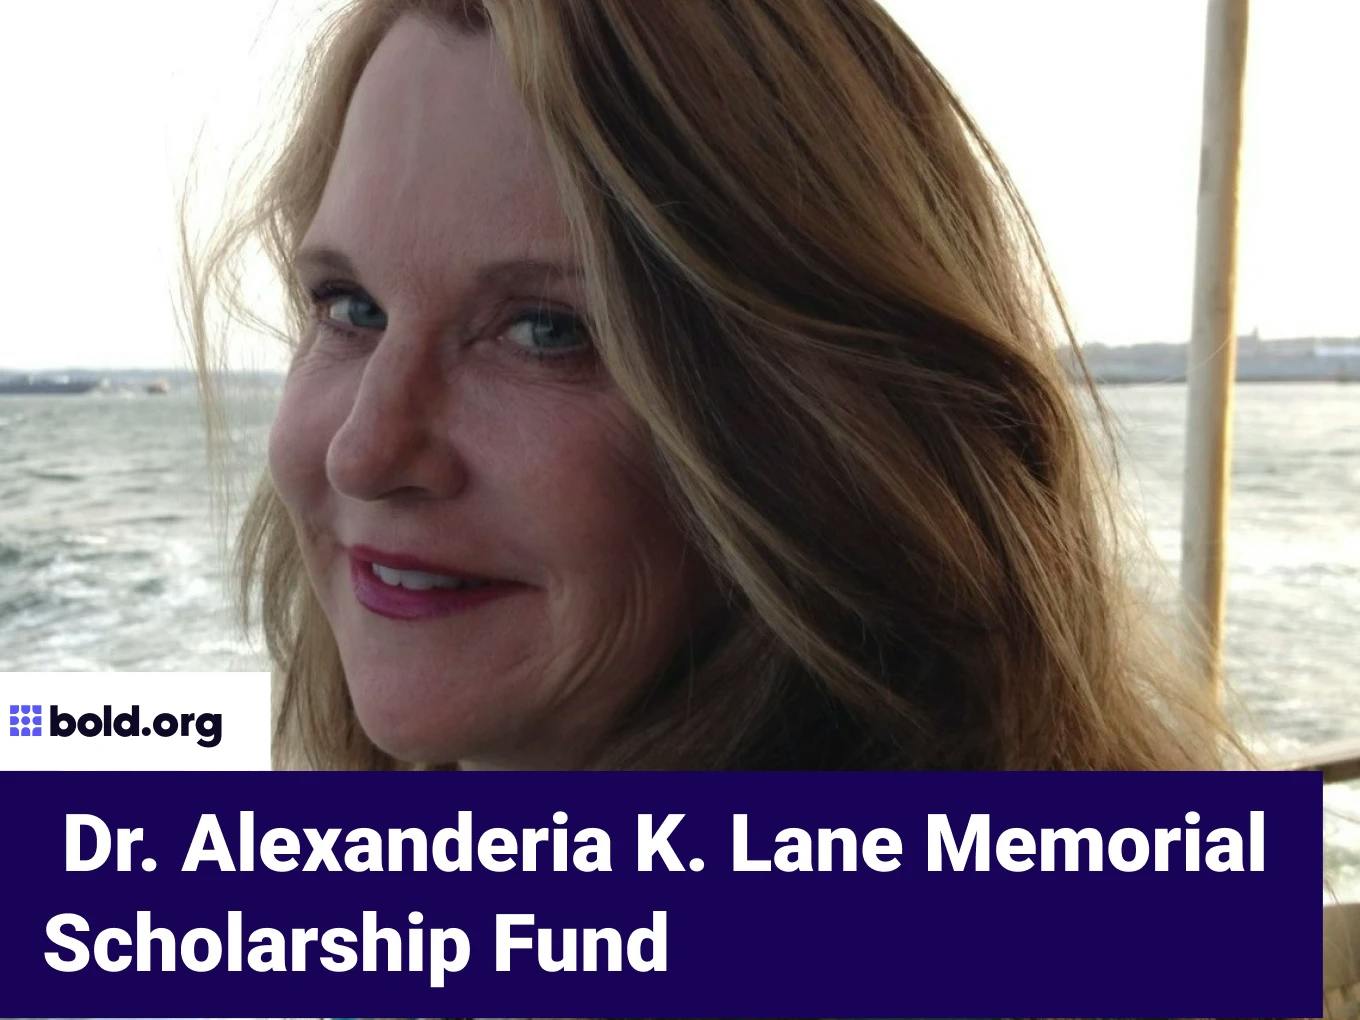 Dr. Alexanderia K. Lane Memorial Scholarship Fund